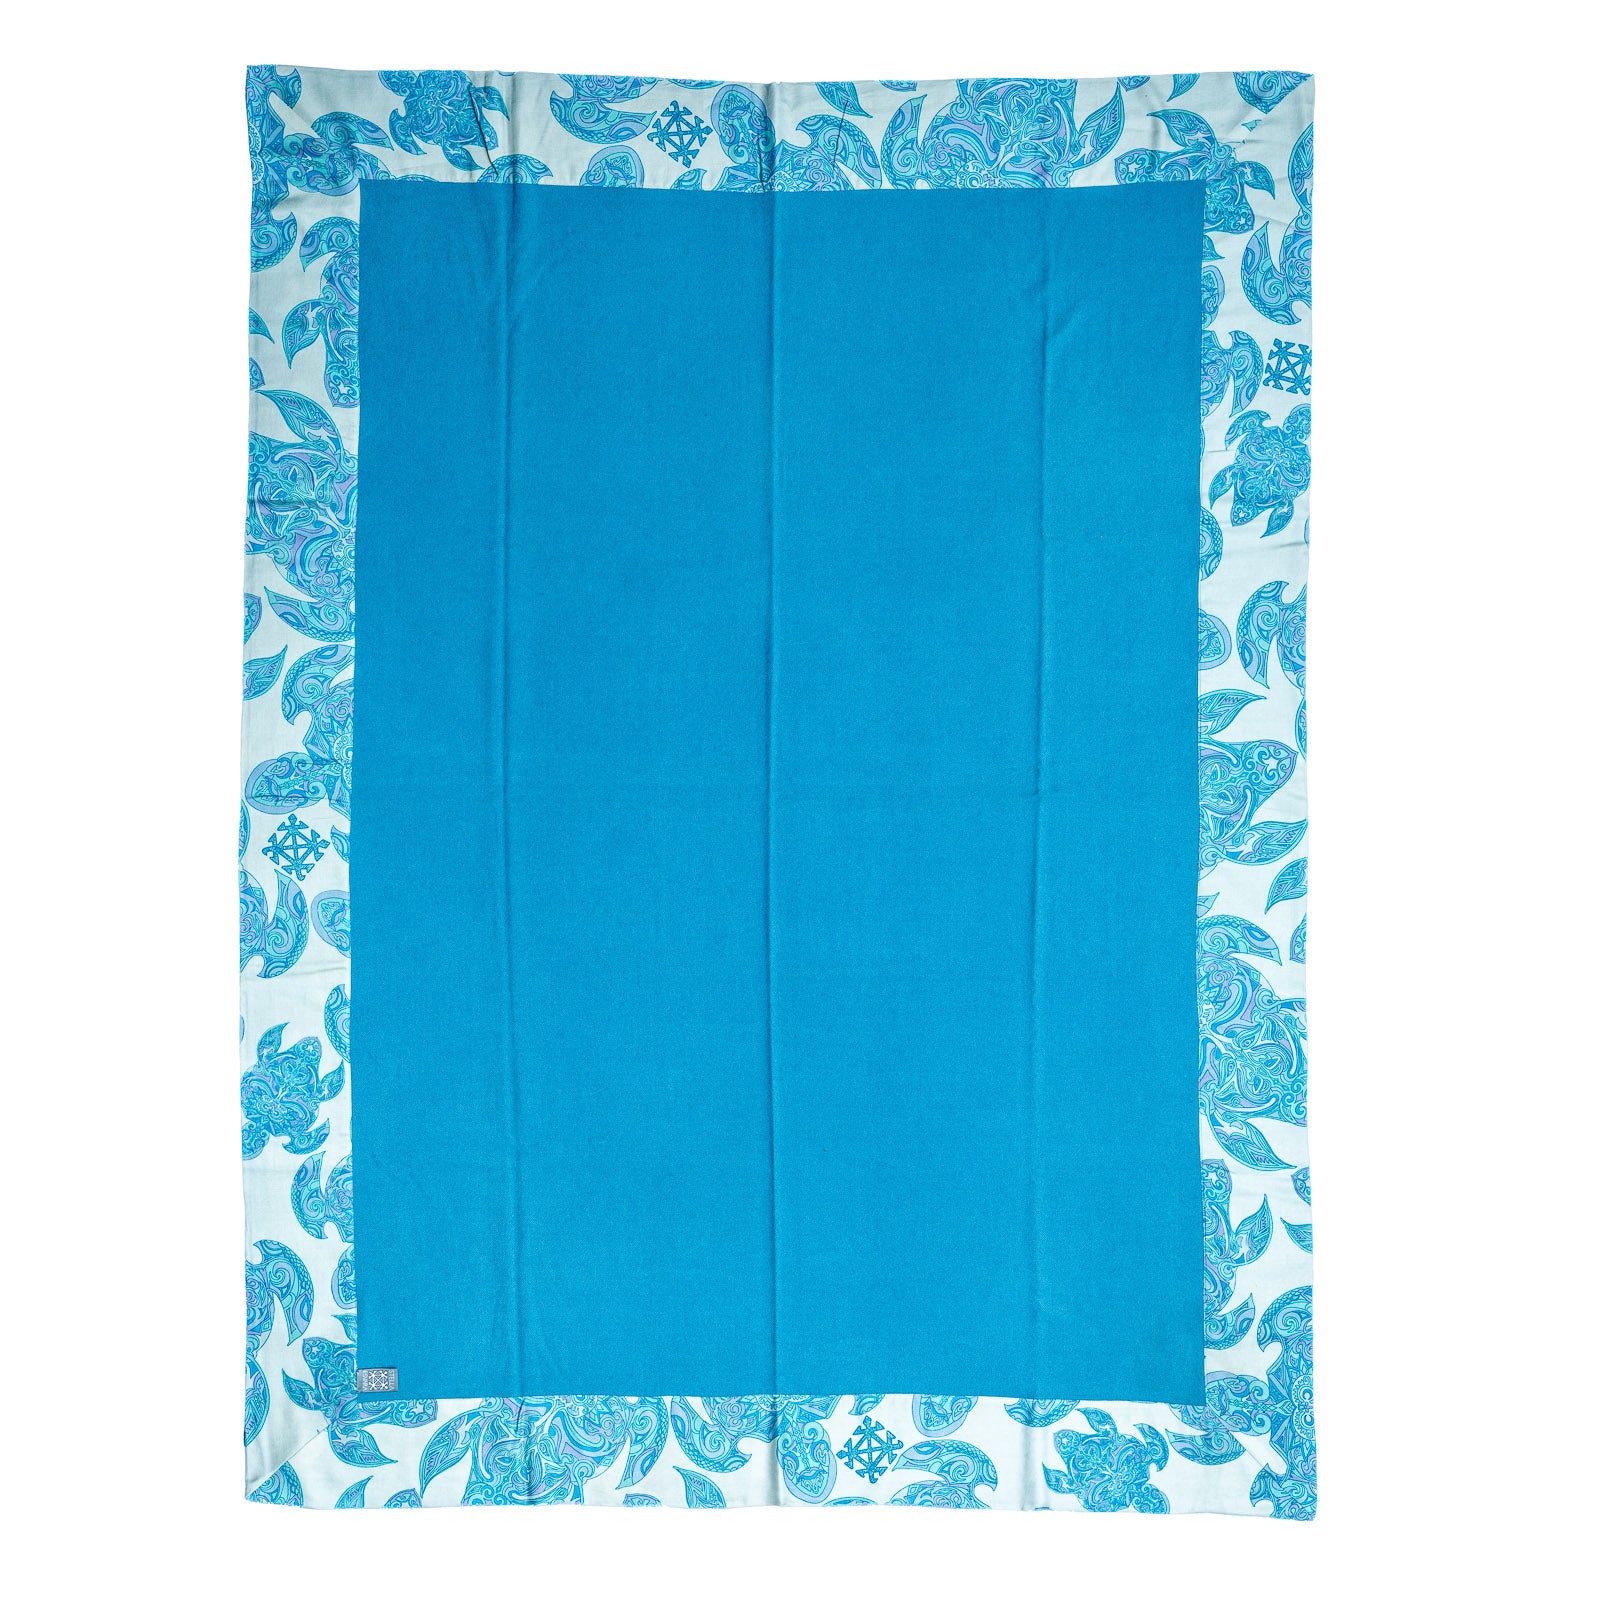 Plaid ESVARA TURTLES on silk, Twill weave Kaschmir, blau, 200 x 150 cm